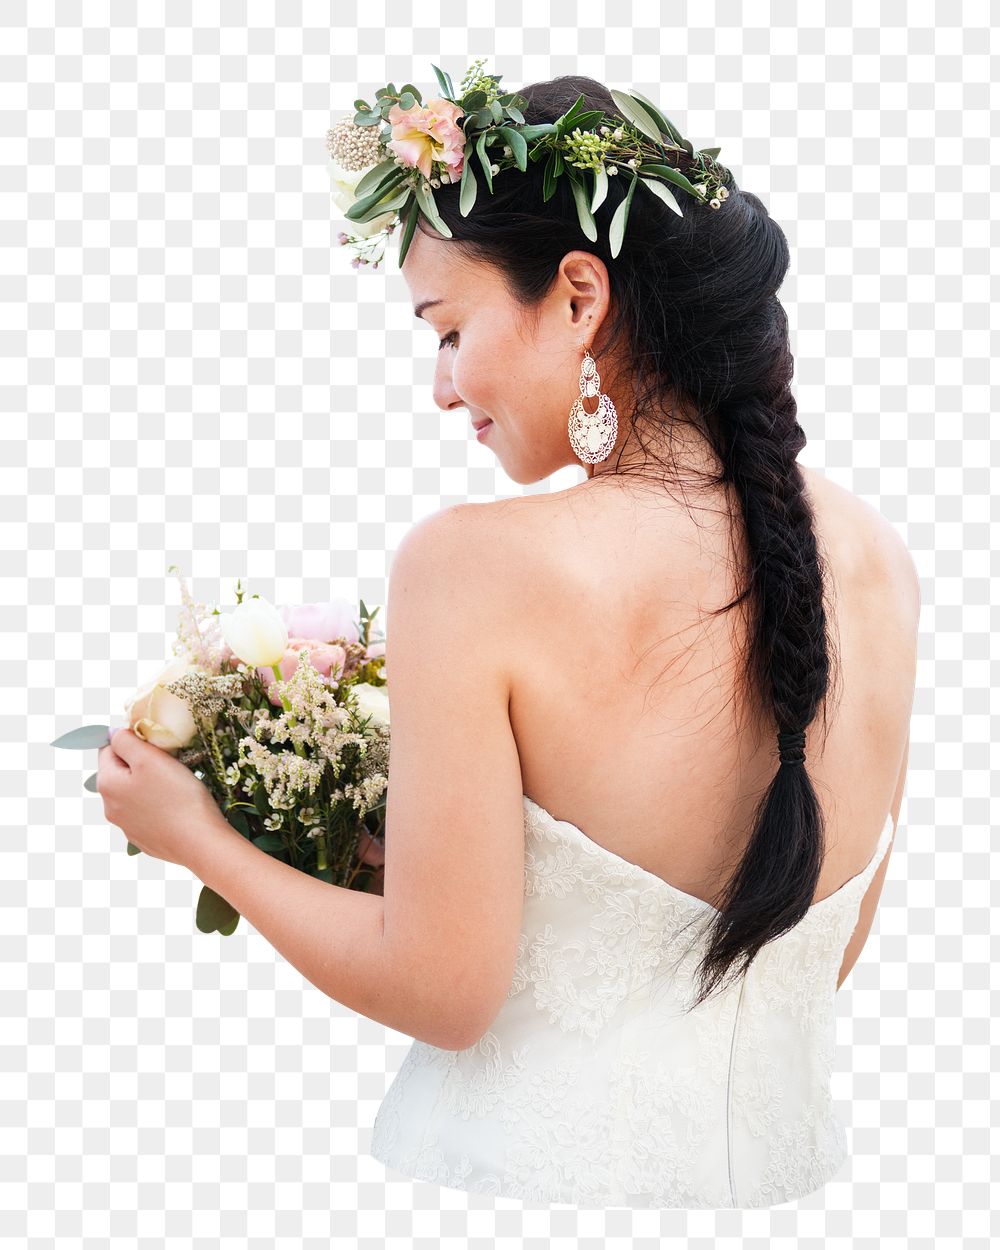 Beautiful bride png sticker, transparent background